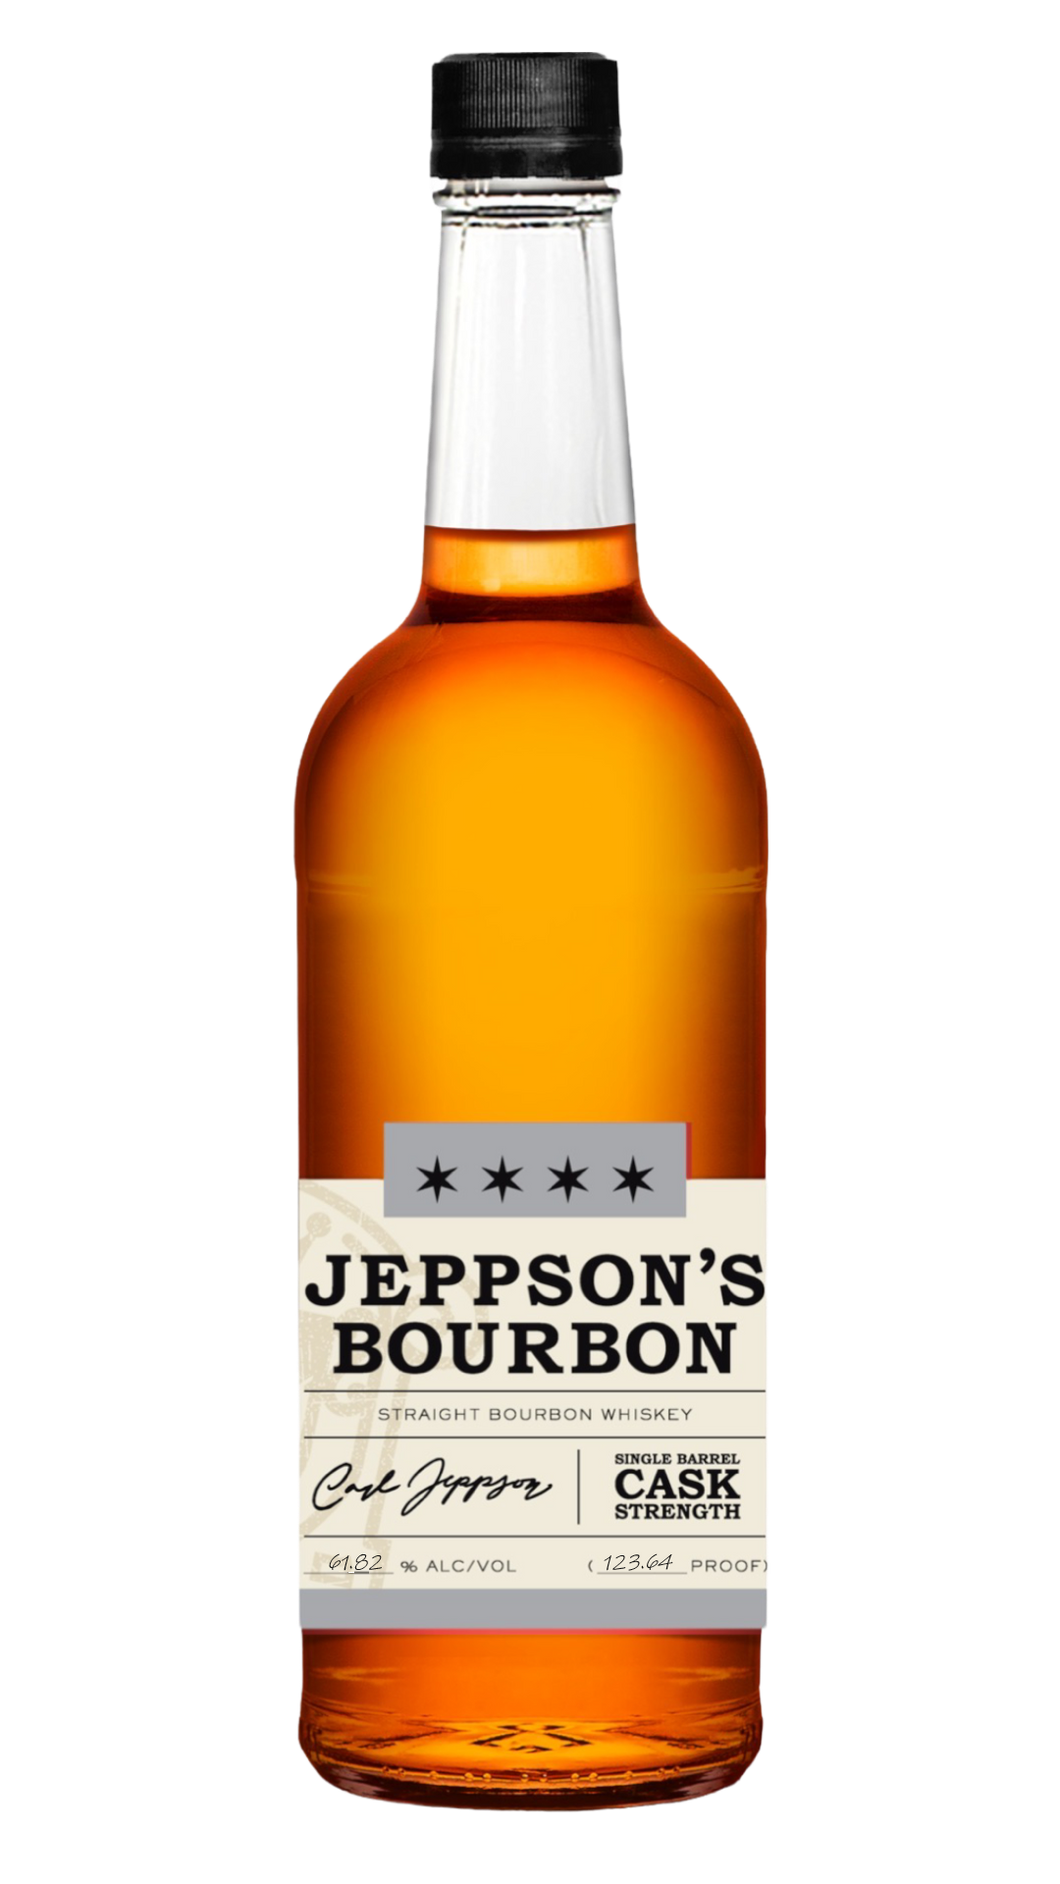 Jeppson’s 8-Year Single Barrel Bourbon 123.64 proof - Selected by Seelbach’s